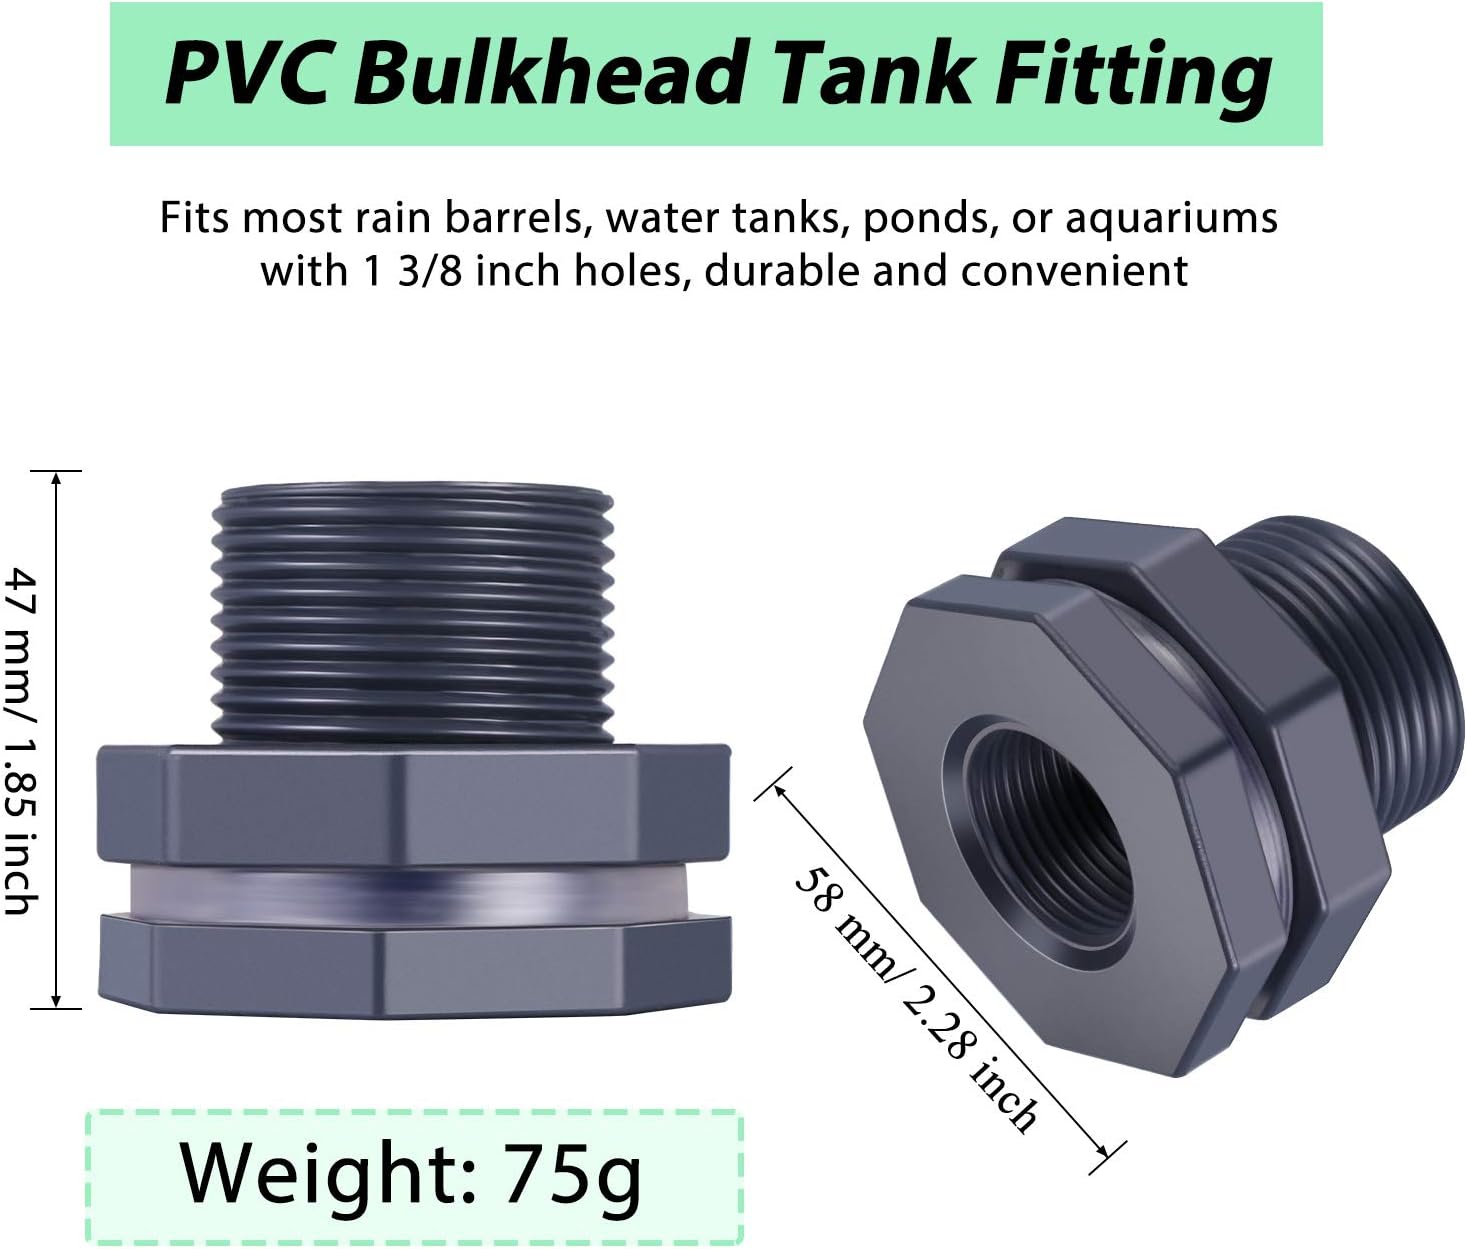 2 Pieces PVC Bulkhead Fitting for Rain Barrels, Aquariums, Water Tanks (3/4 Inch)